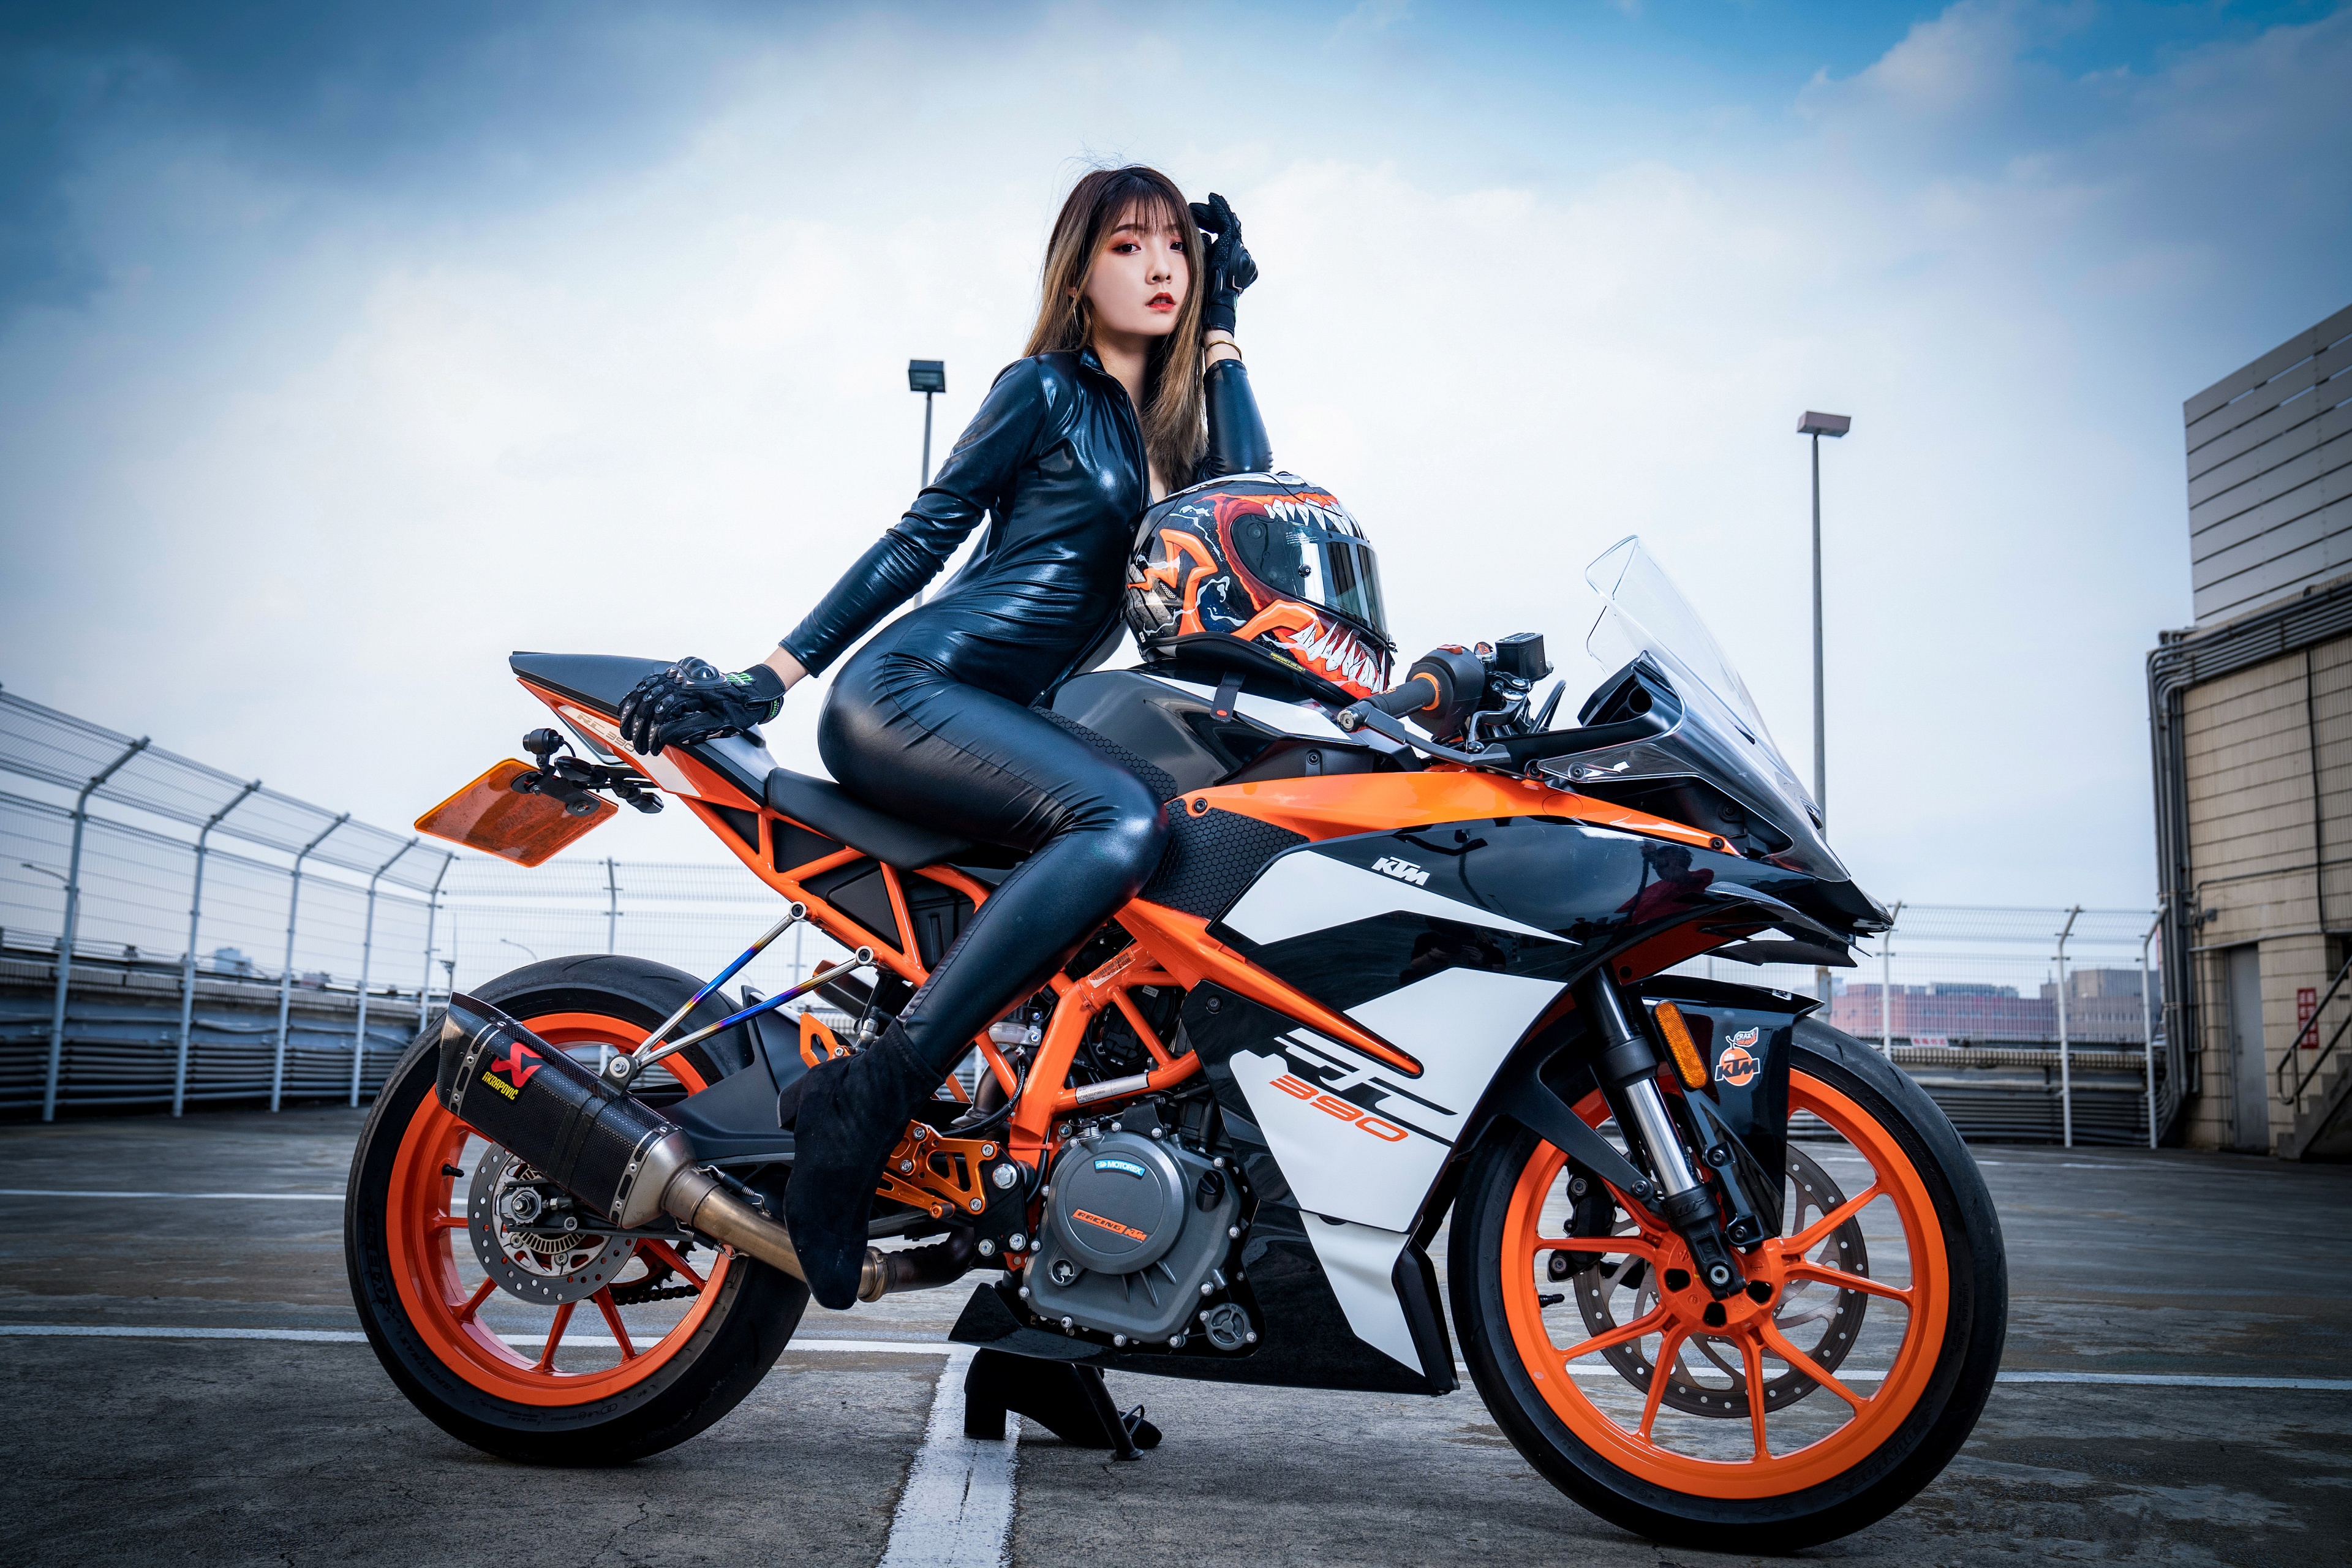 girls & motorcycles, ktm, model, women, asian, brunette, motorcycle 2160p